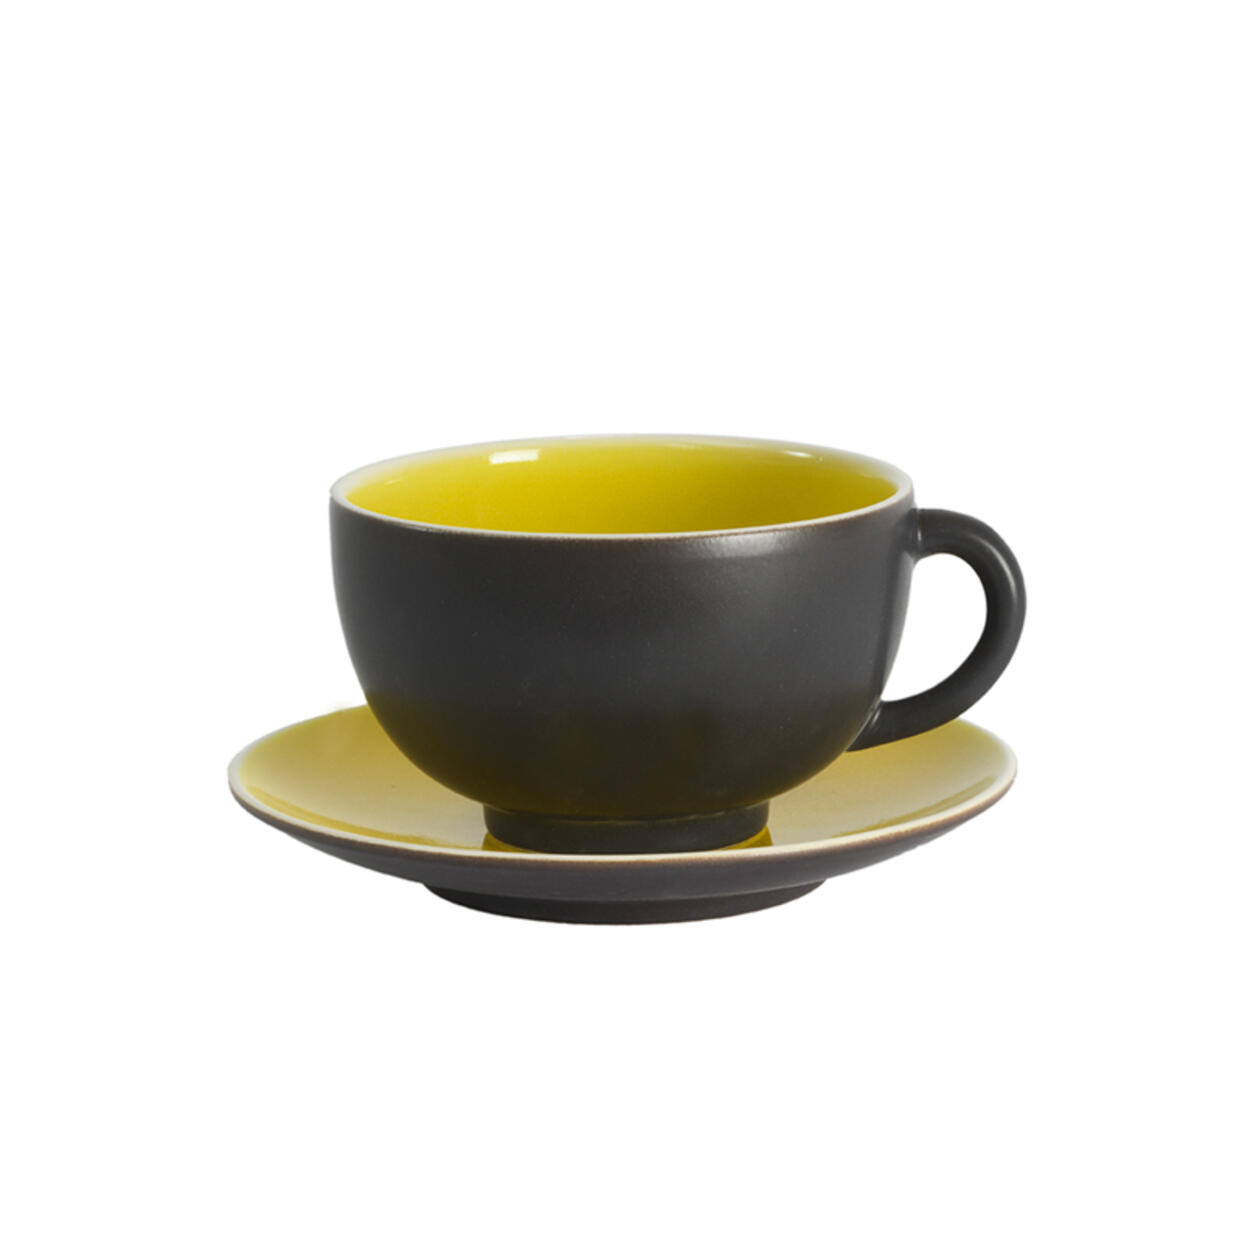 cup & saucer - l tourron citron ceramic manufacturer